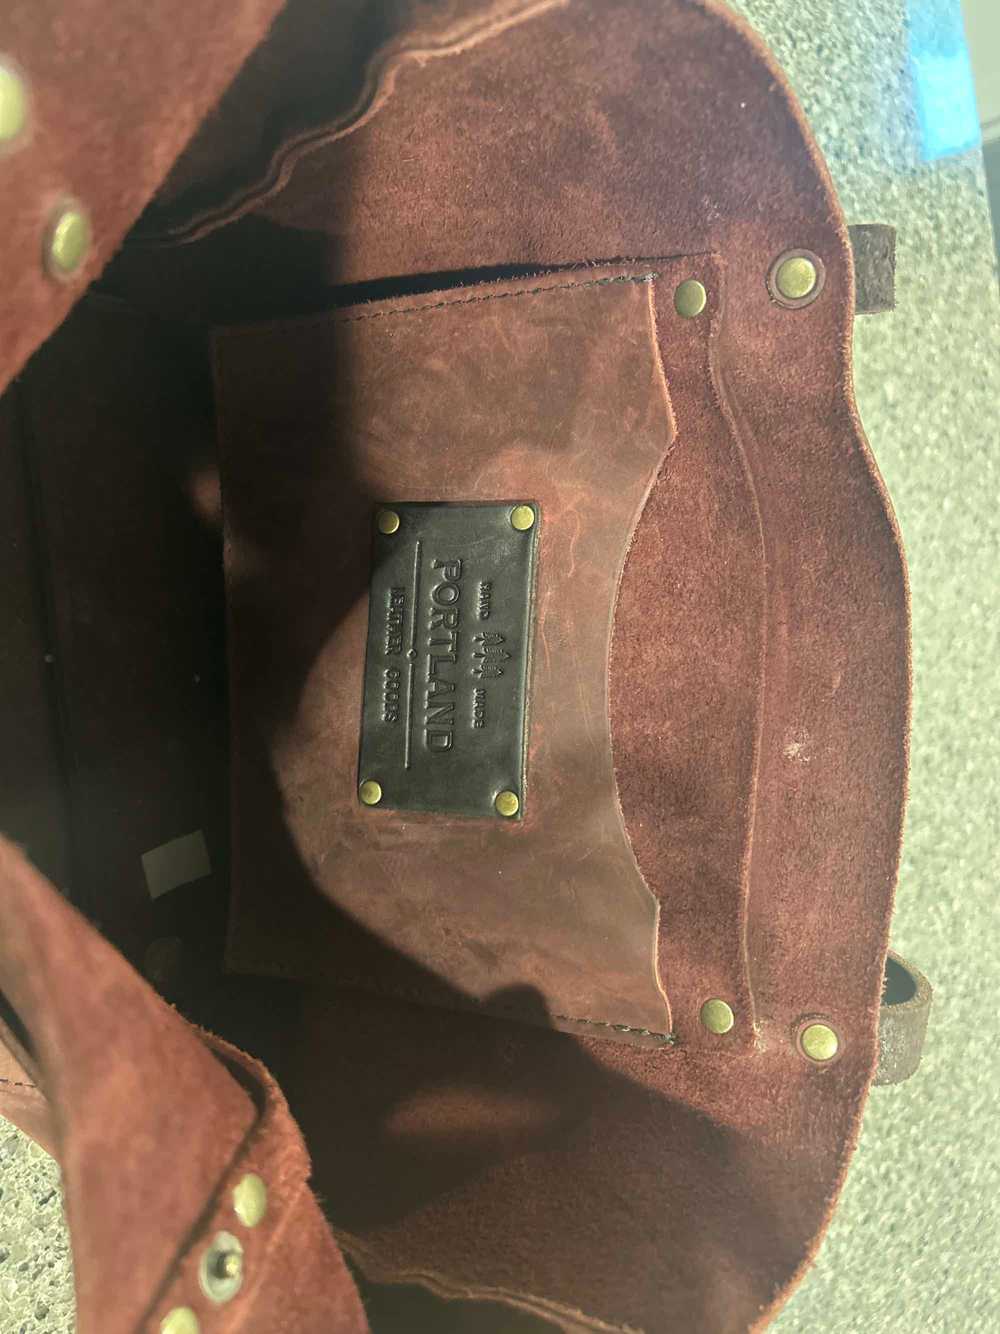 Portland Leather Leather Tote Bag - image 2